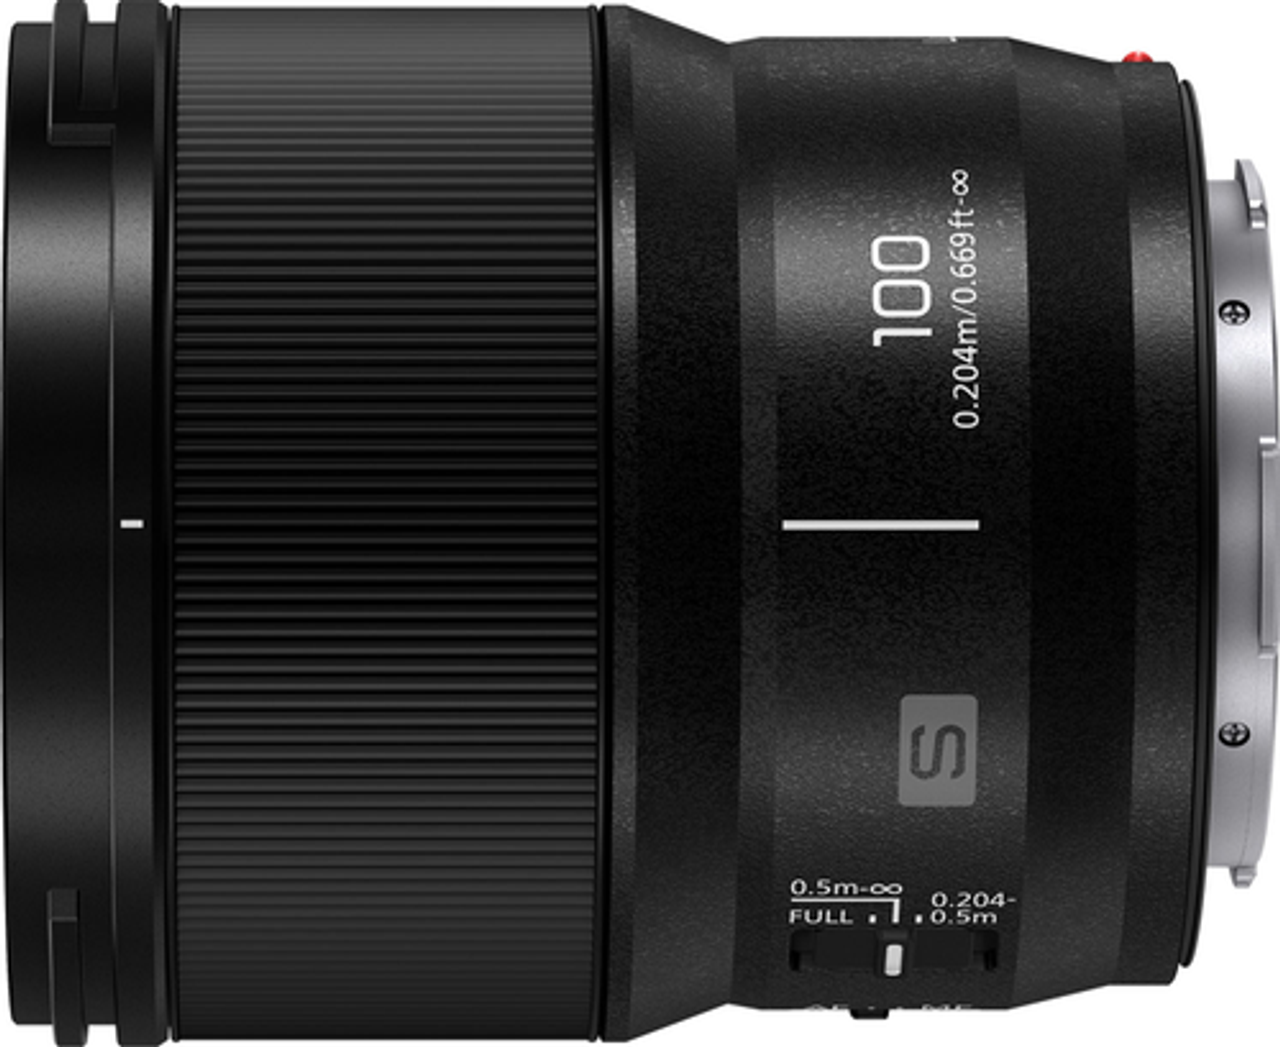 Panasonic - LUMIX Full Frame Camera Lens, S 100mm F2.8 MACRO